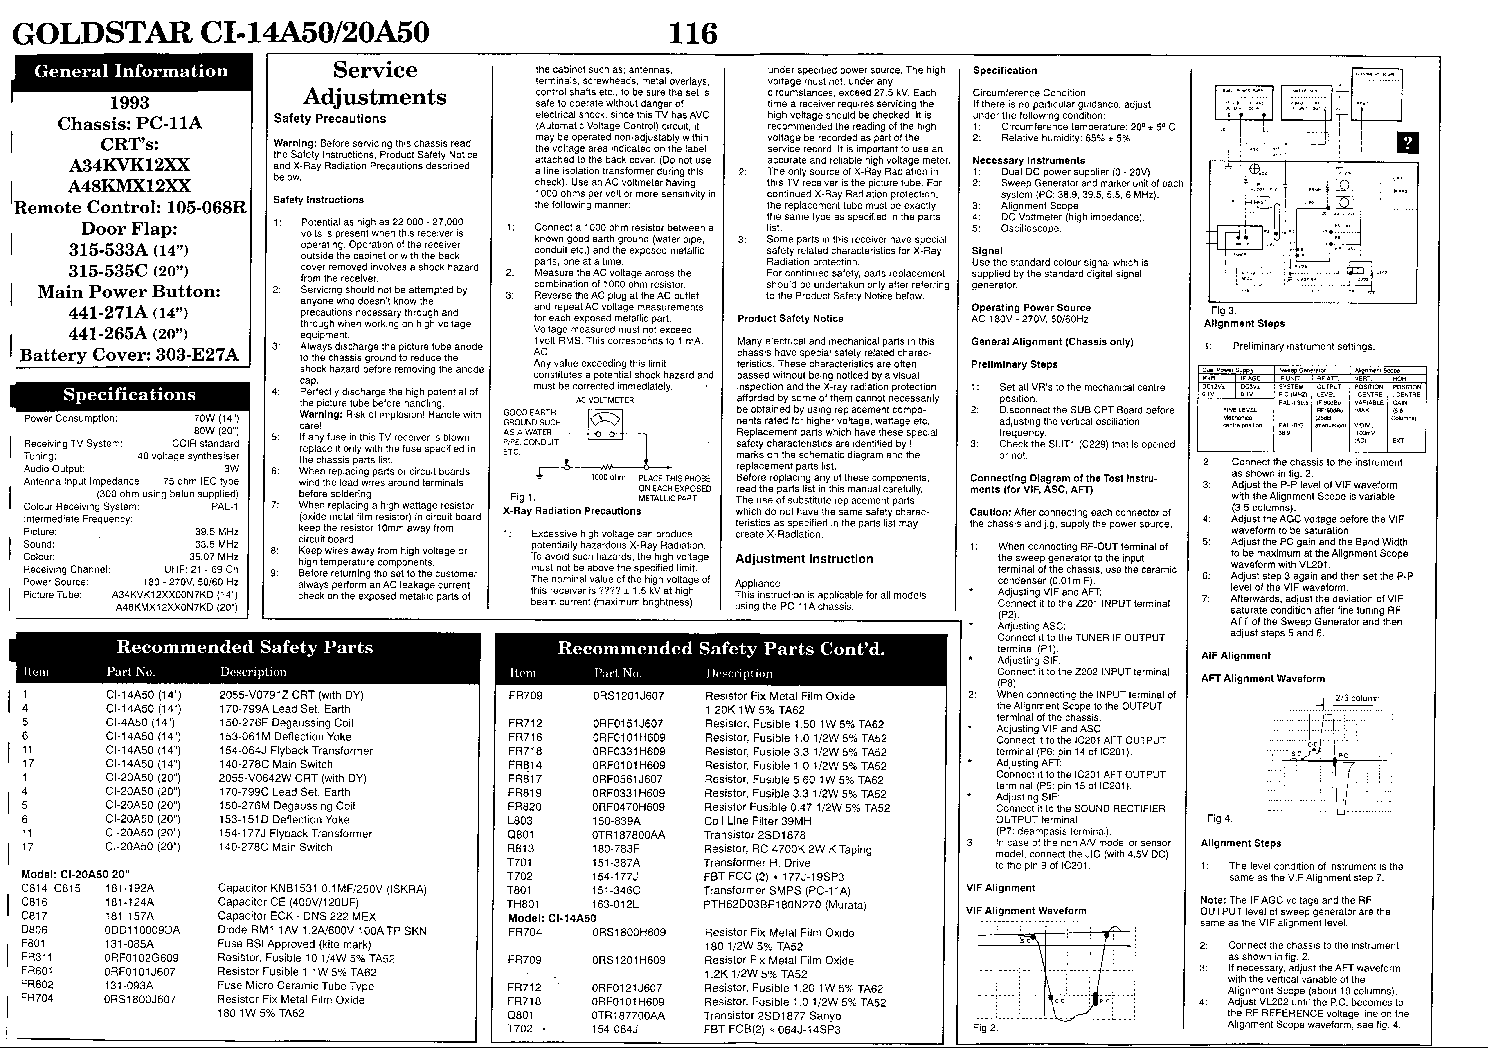 LG CI-14A50 20A50 service manual (1st page)